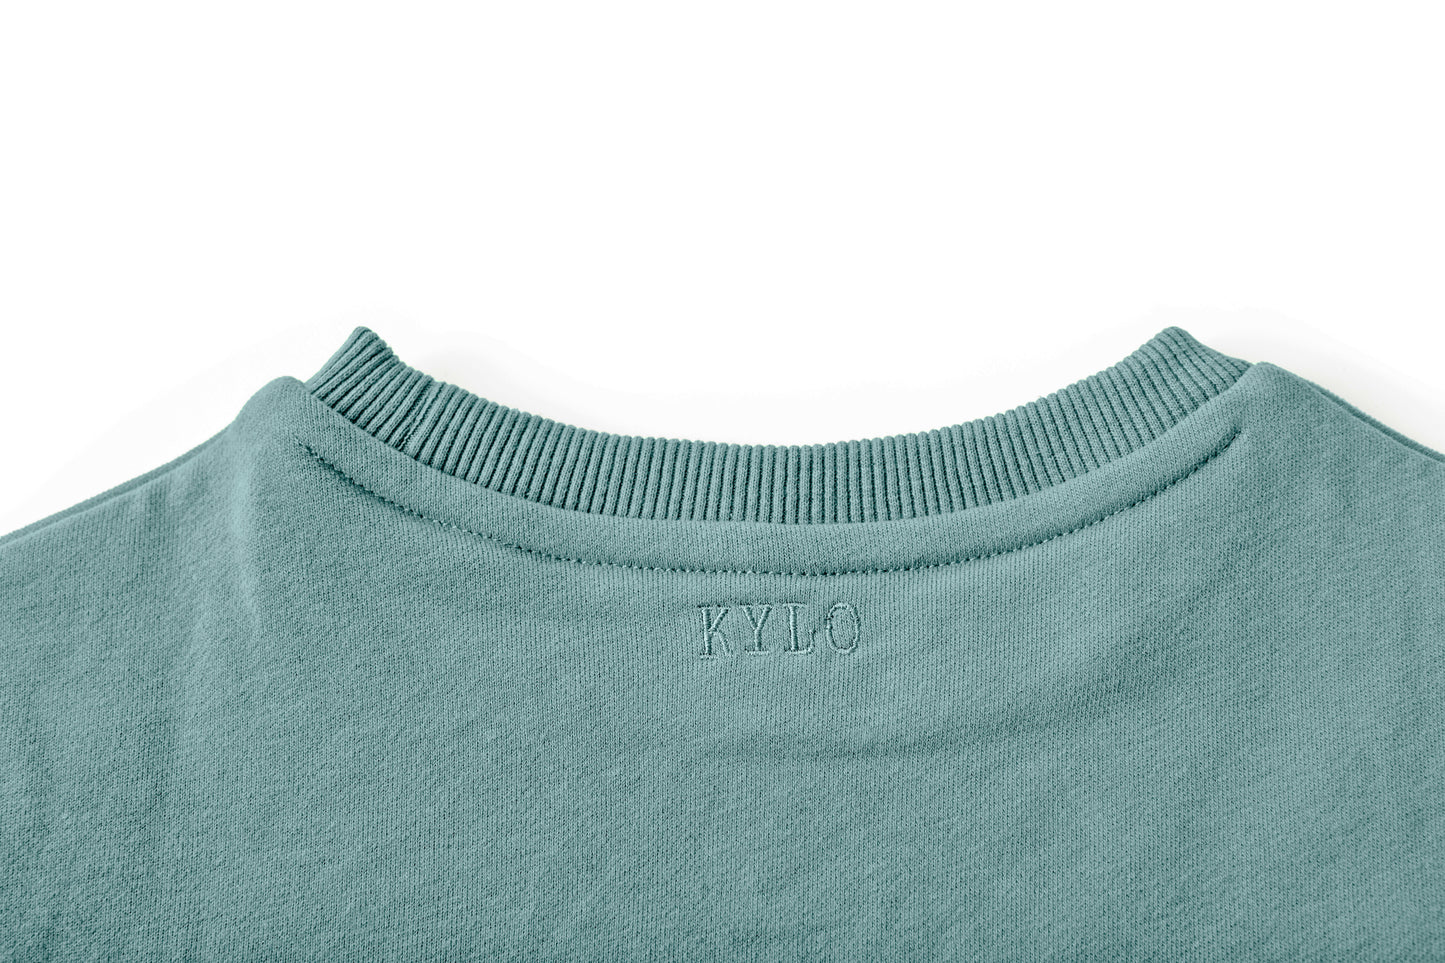 Rain - Kylo Play Sweater - FINAL SALE